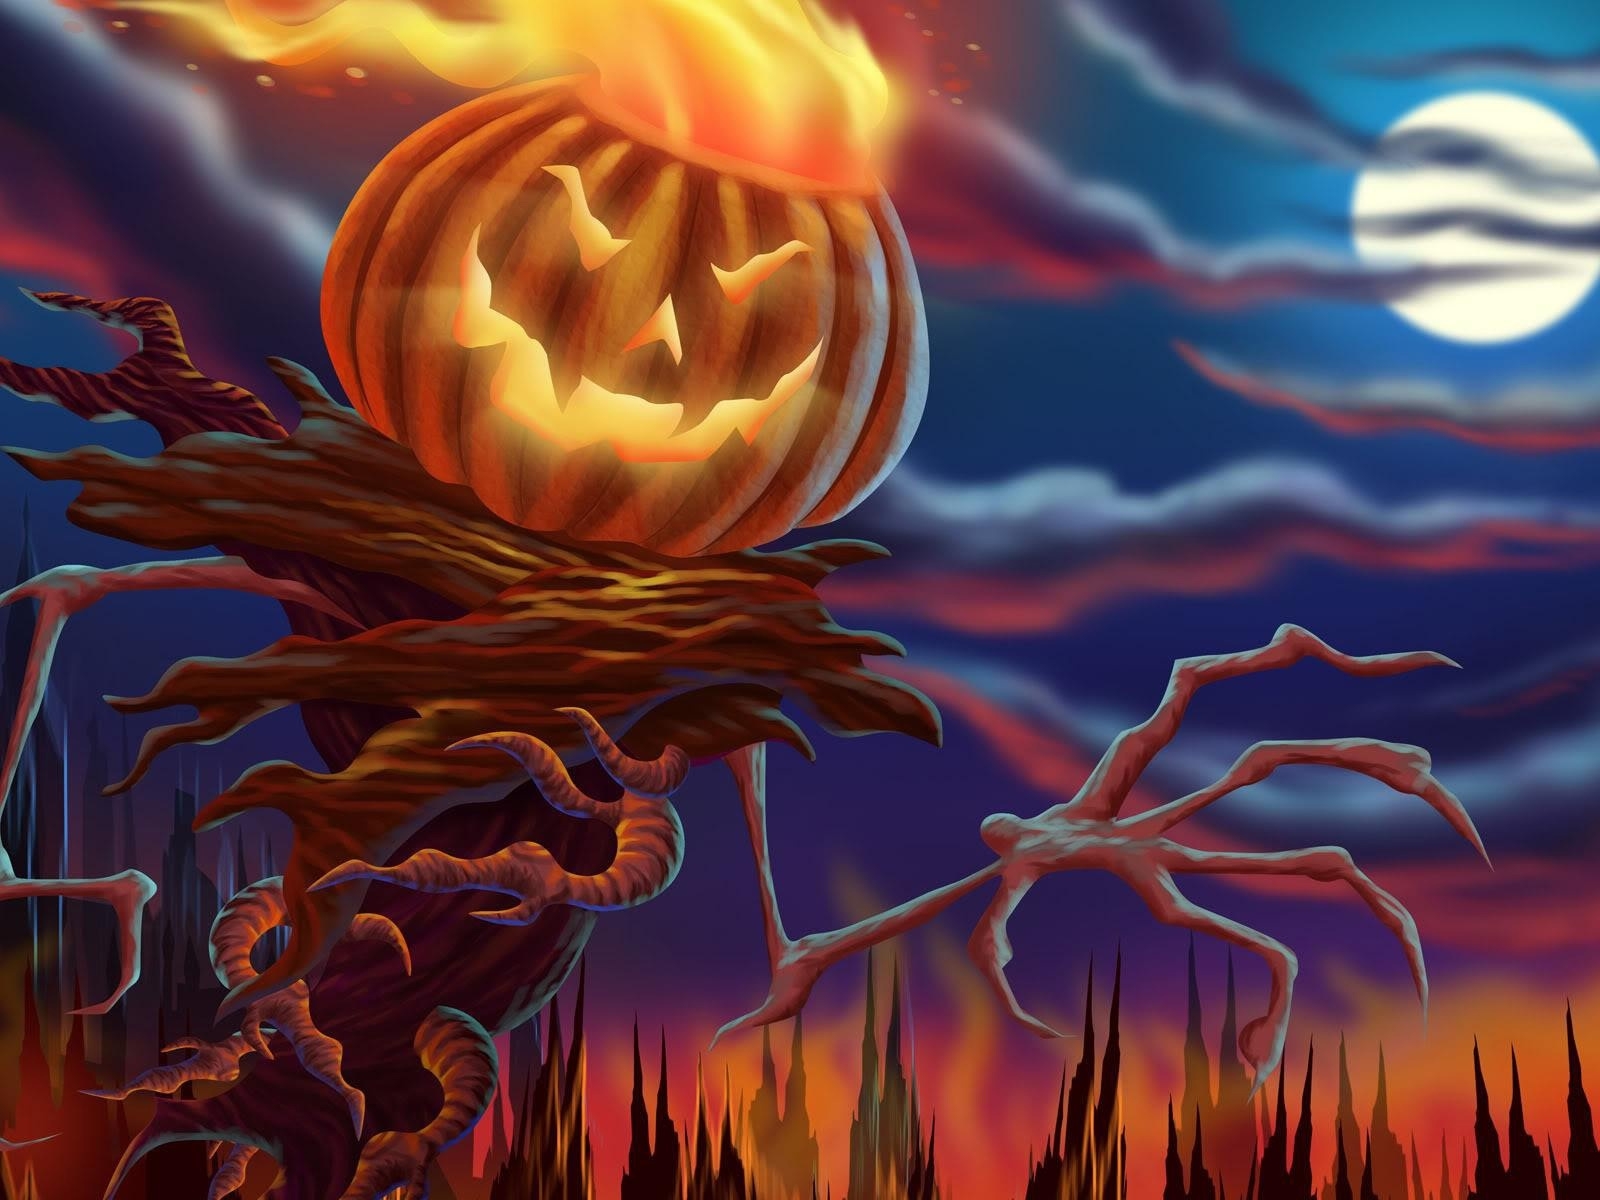 Halloween Digital Illustration for 1600 x 1200 resolution